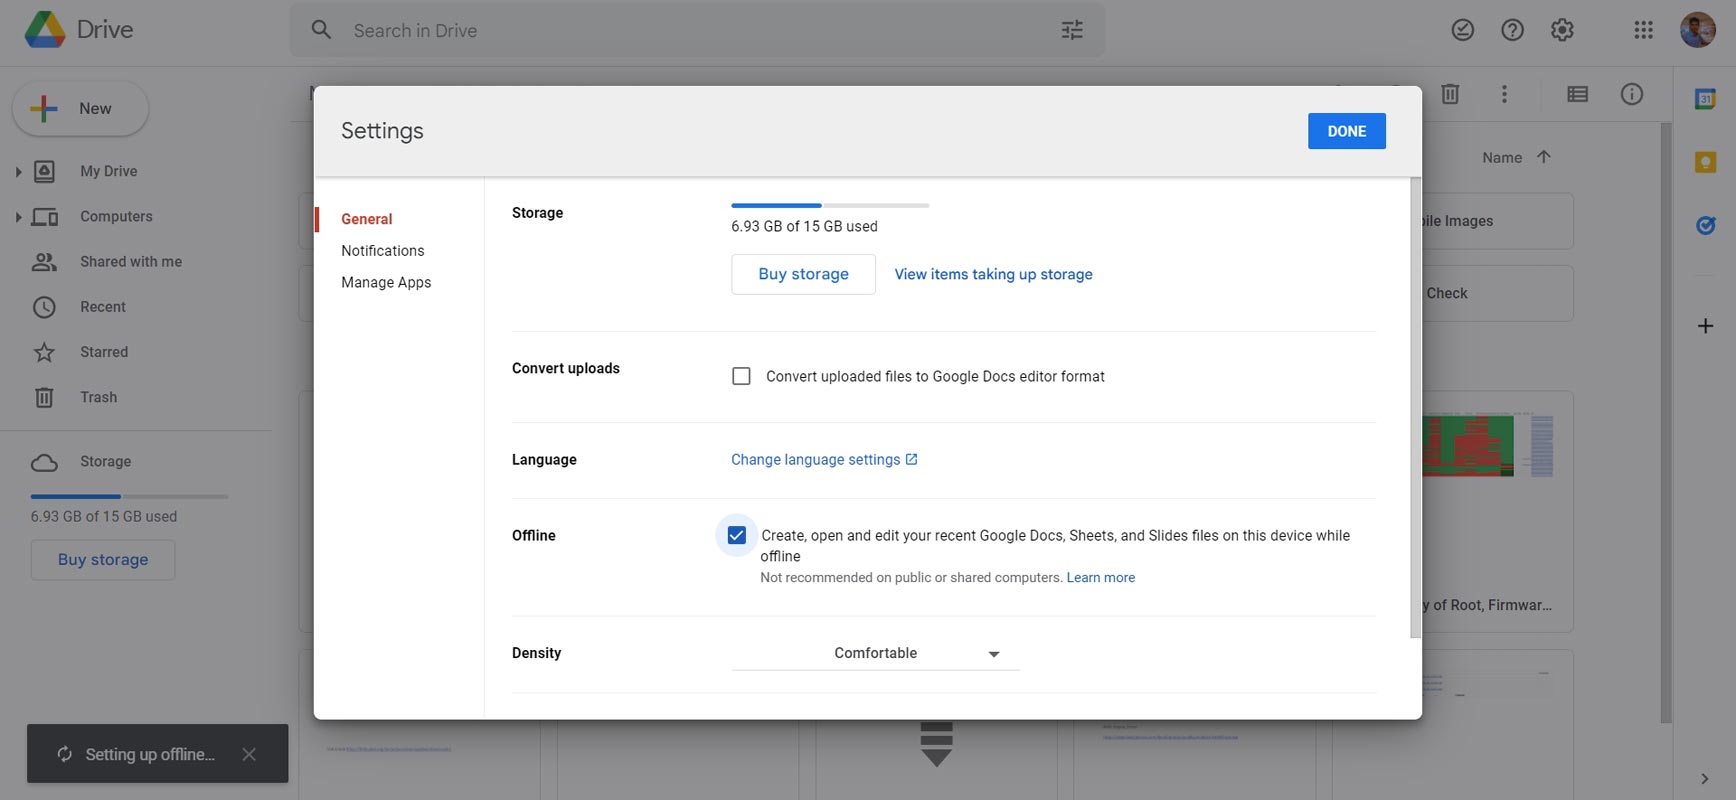 Google Drive Offline Settings